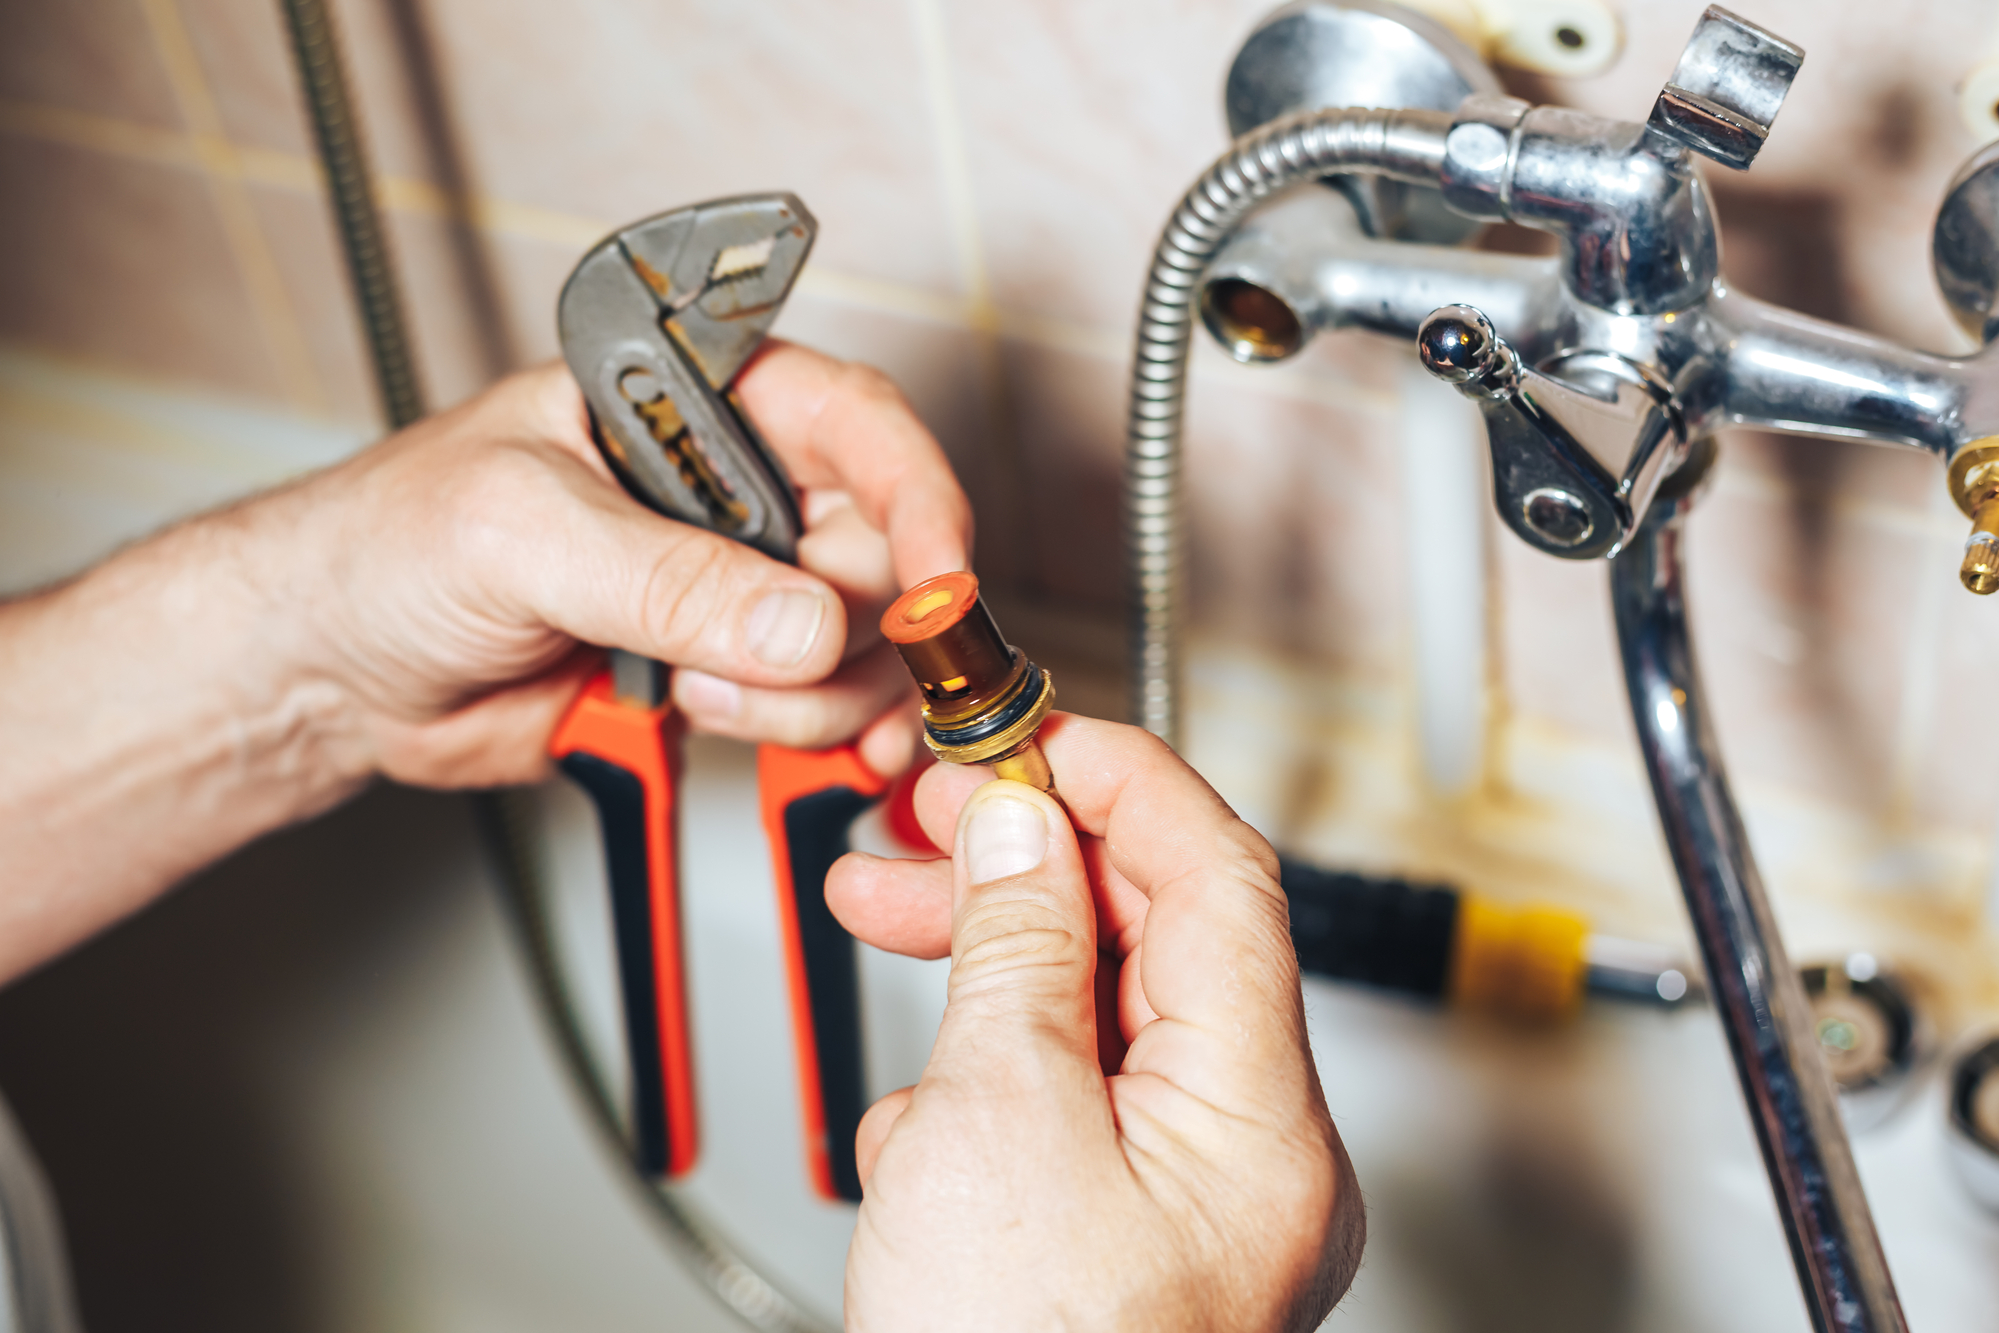 Homeward Bound Waggin seeks help for emergency plumbing fix | News